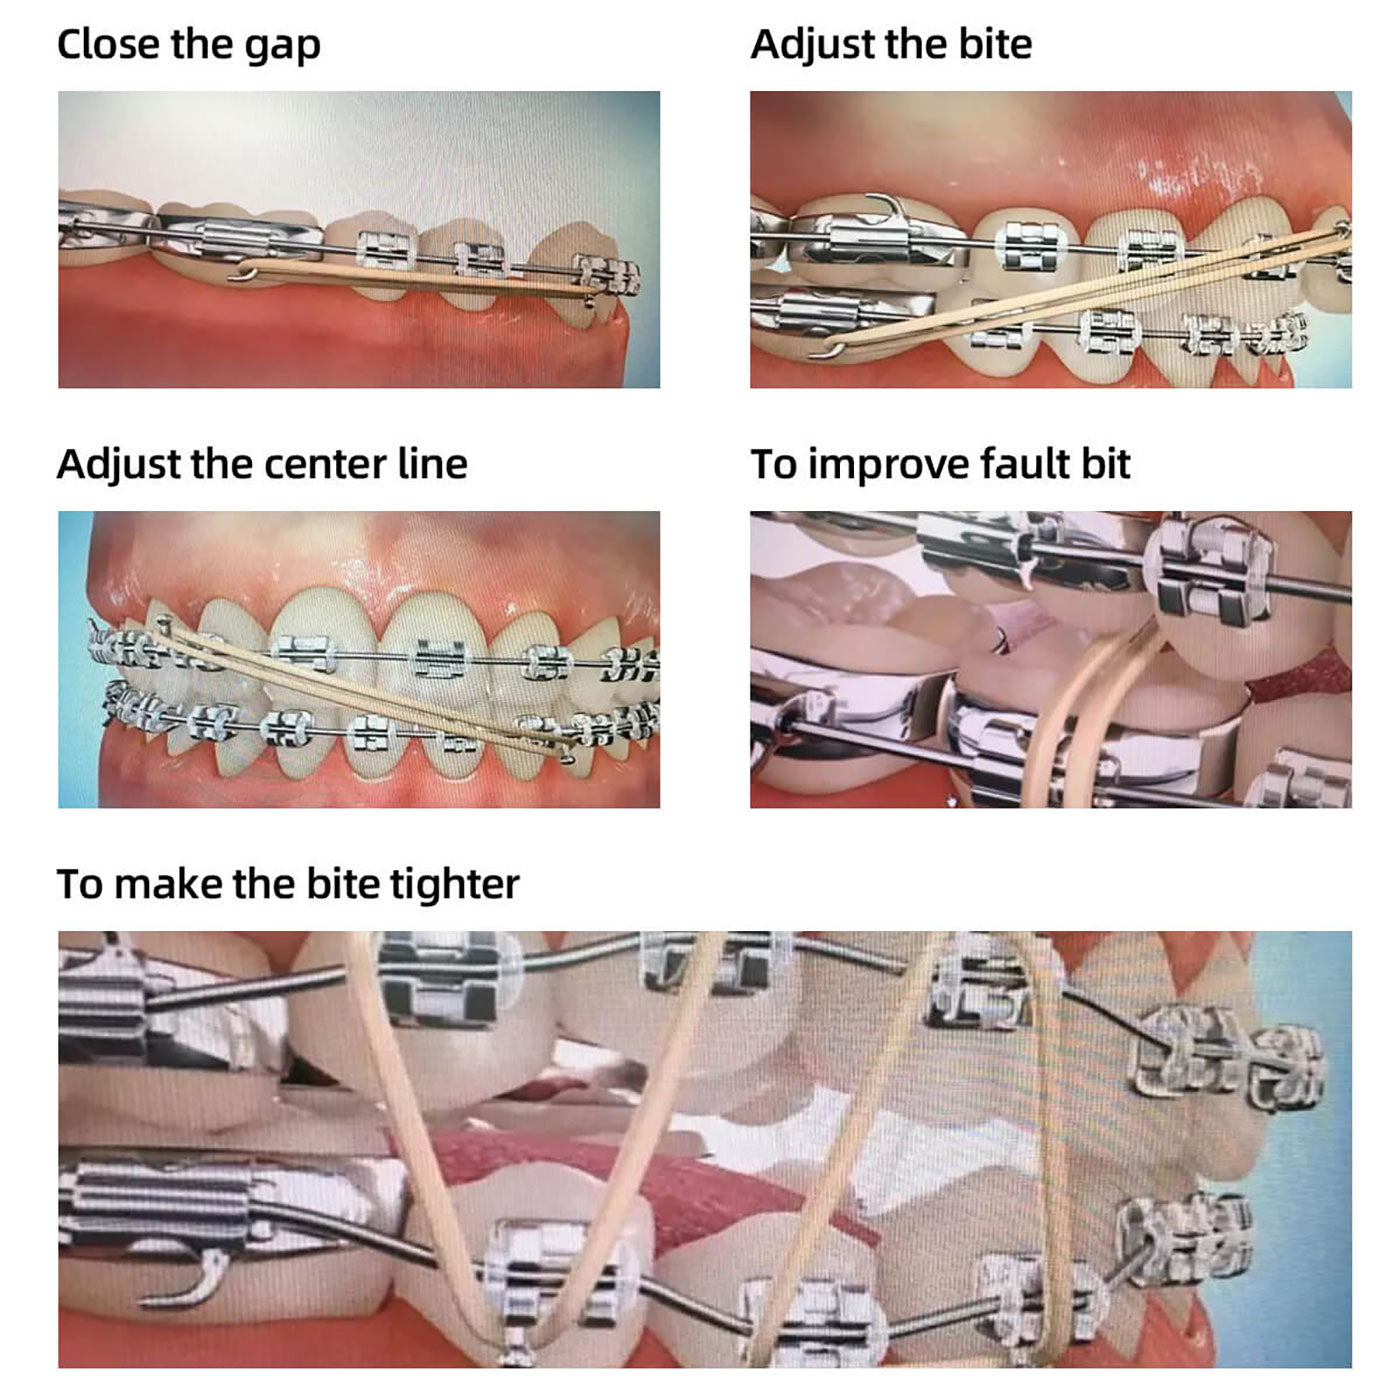 Pengpengfang Dental Orthodontic Rubber Bands Ortho Elastics Latex Braces  Non-toxic Tool 